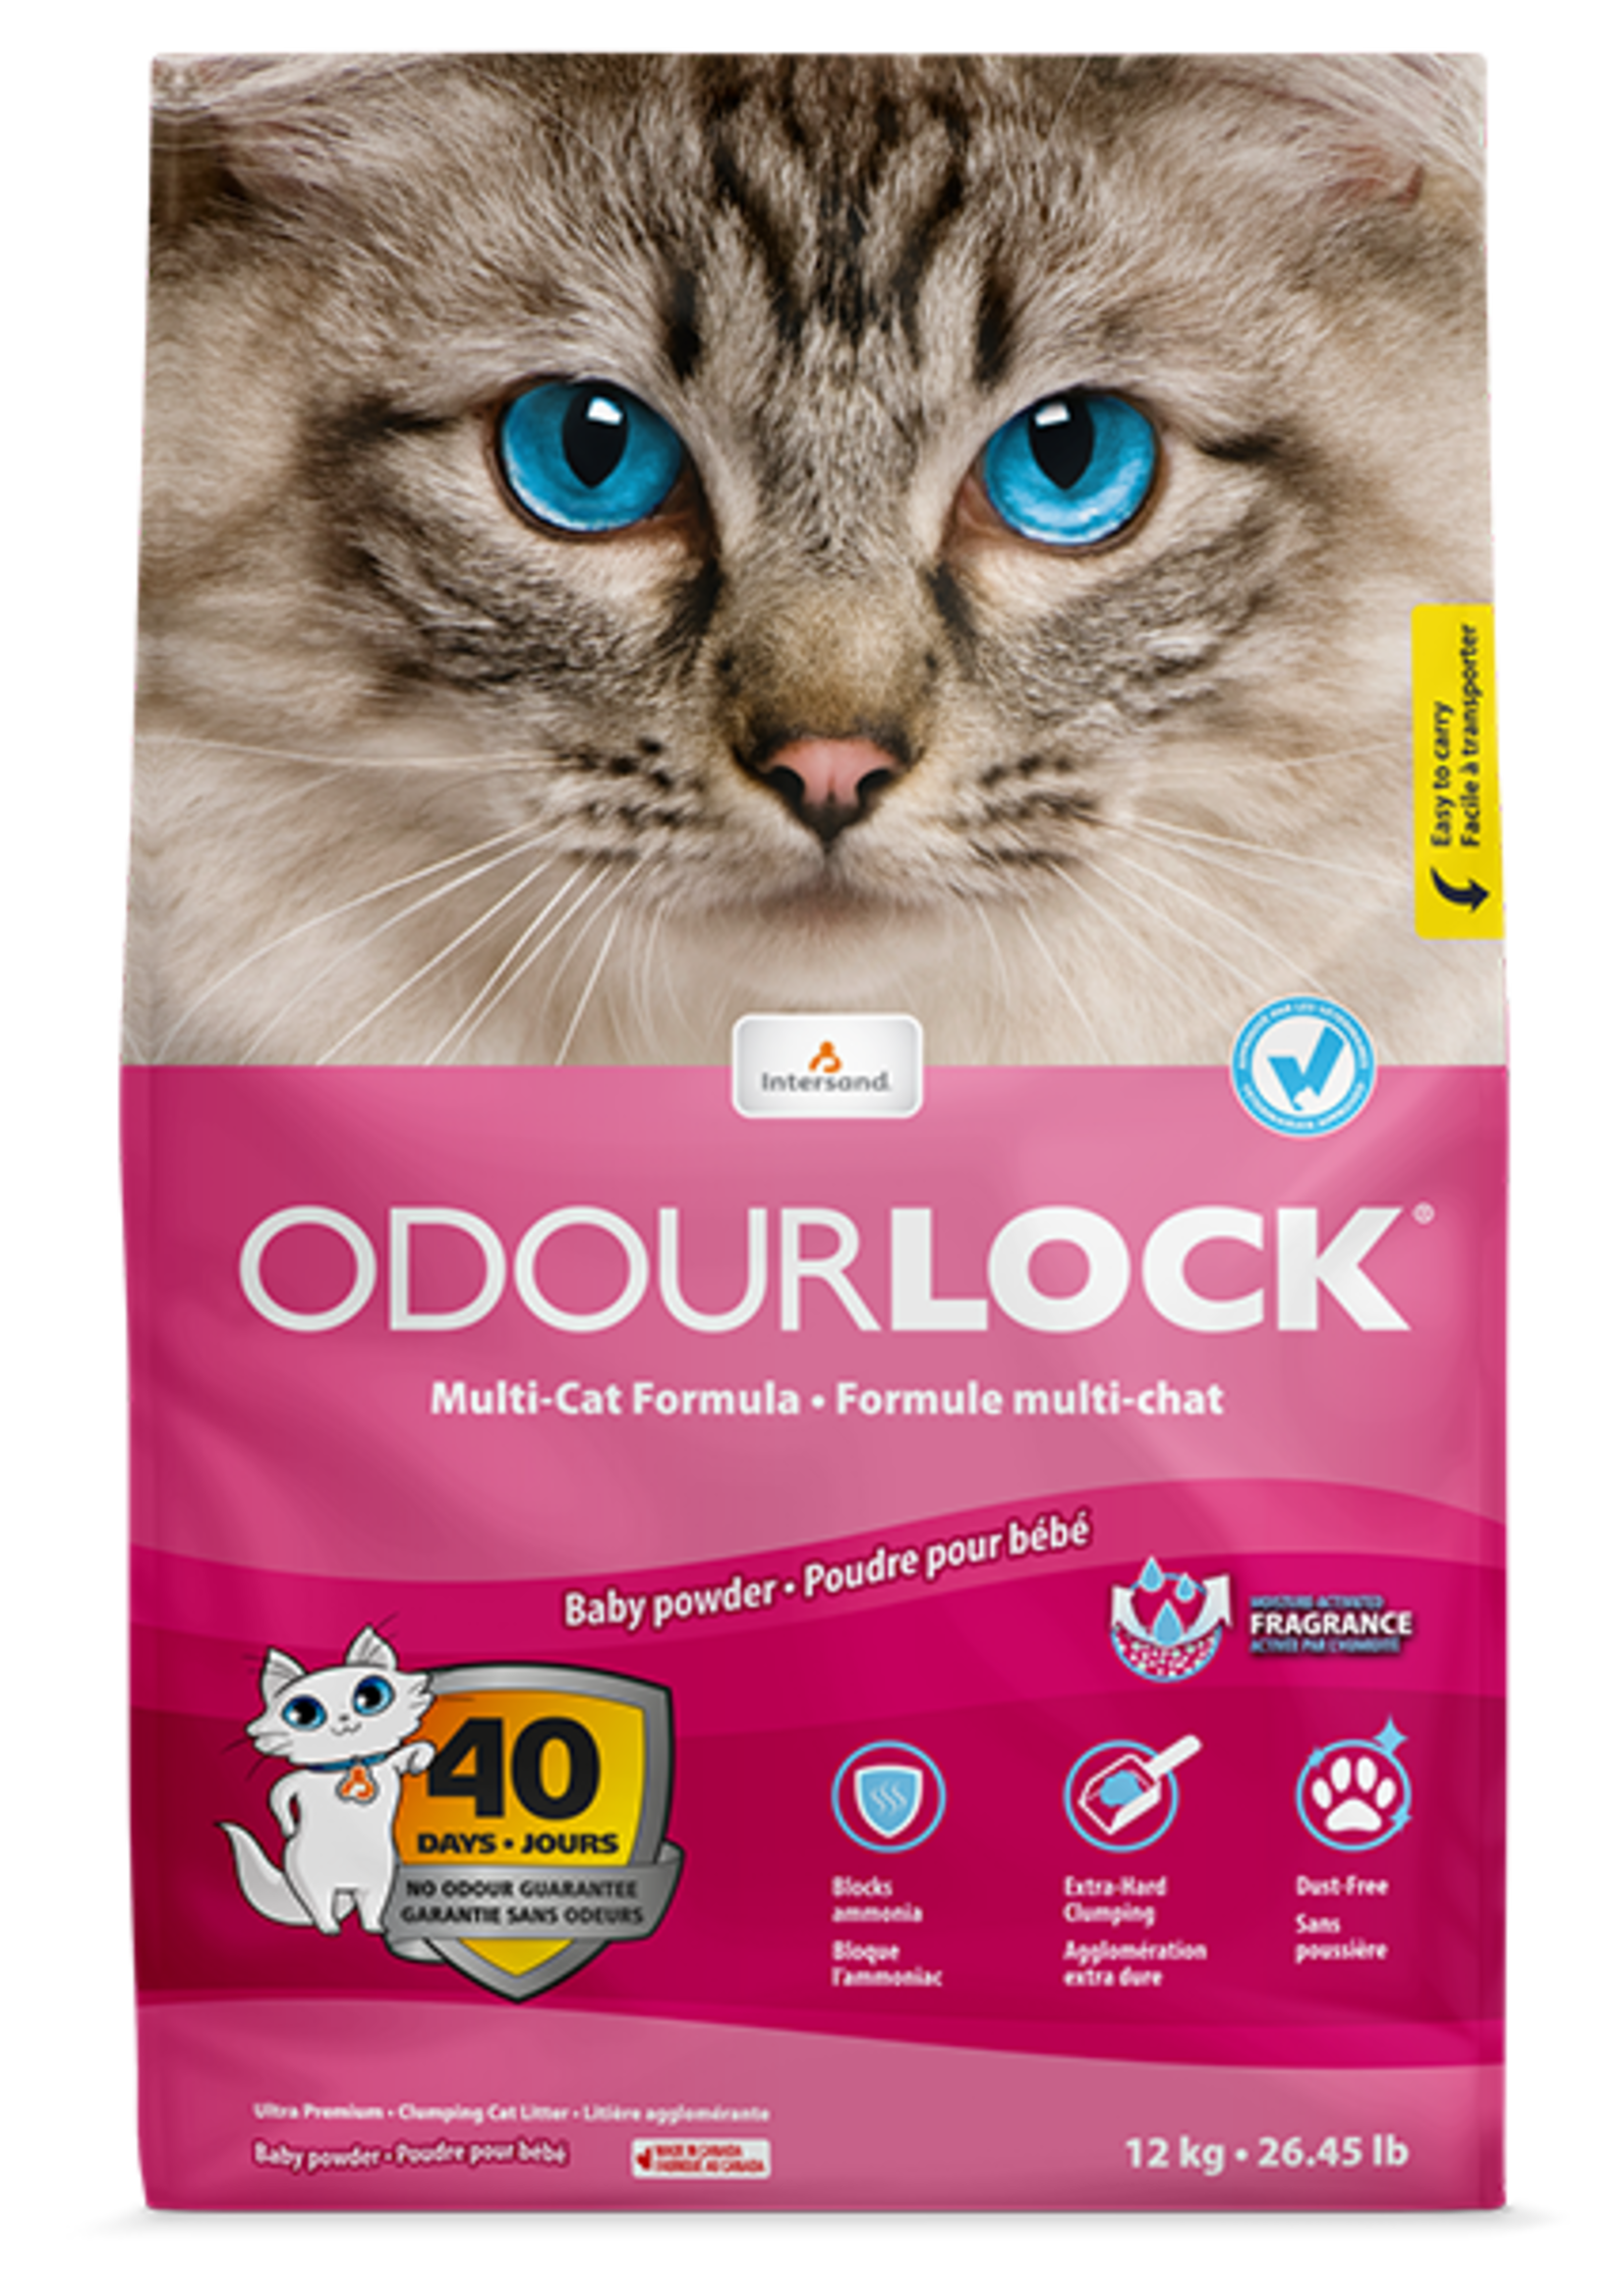 OdourLock Odour Lock Baby Powder 12 kg